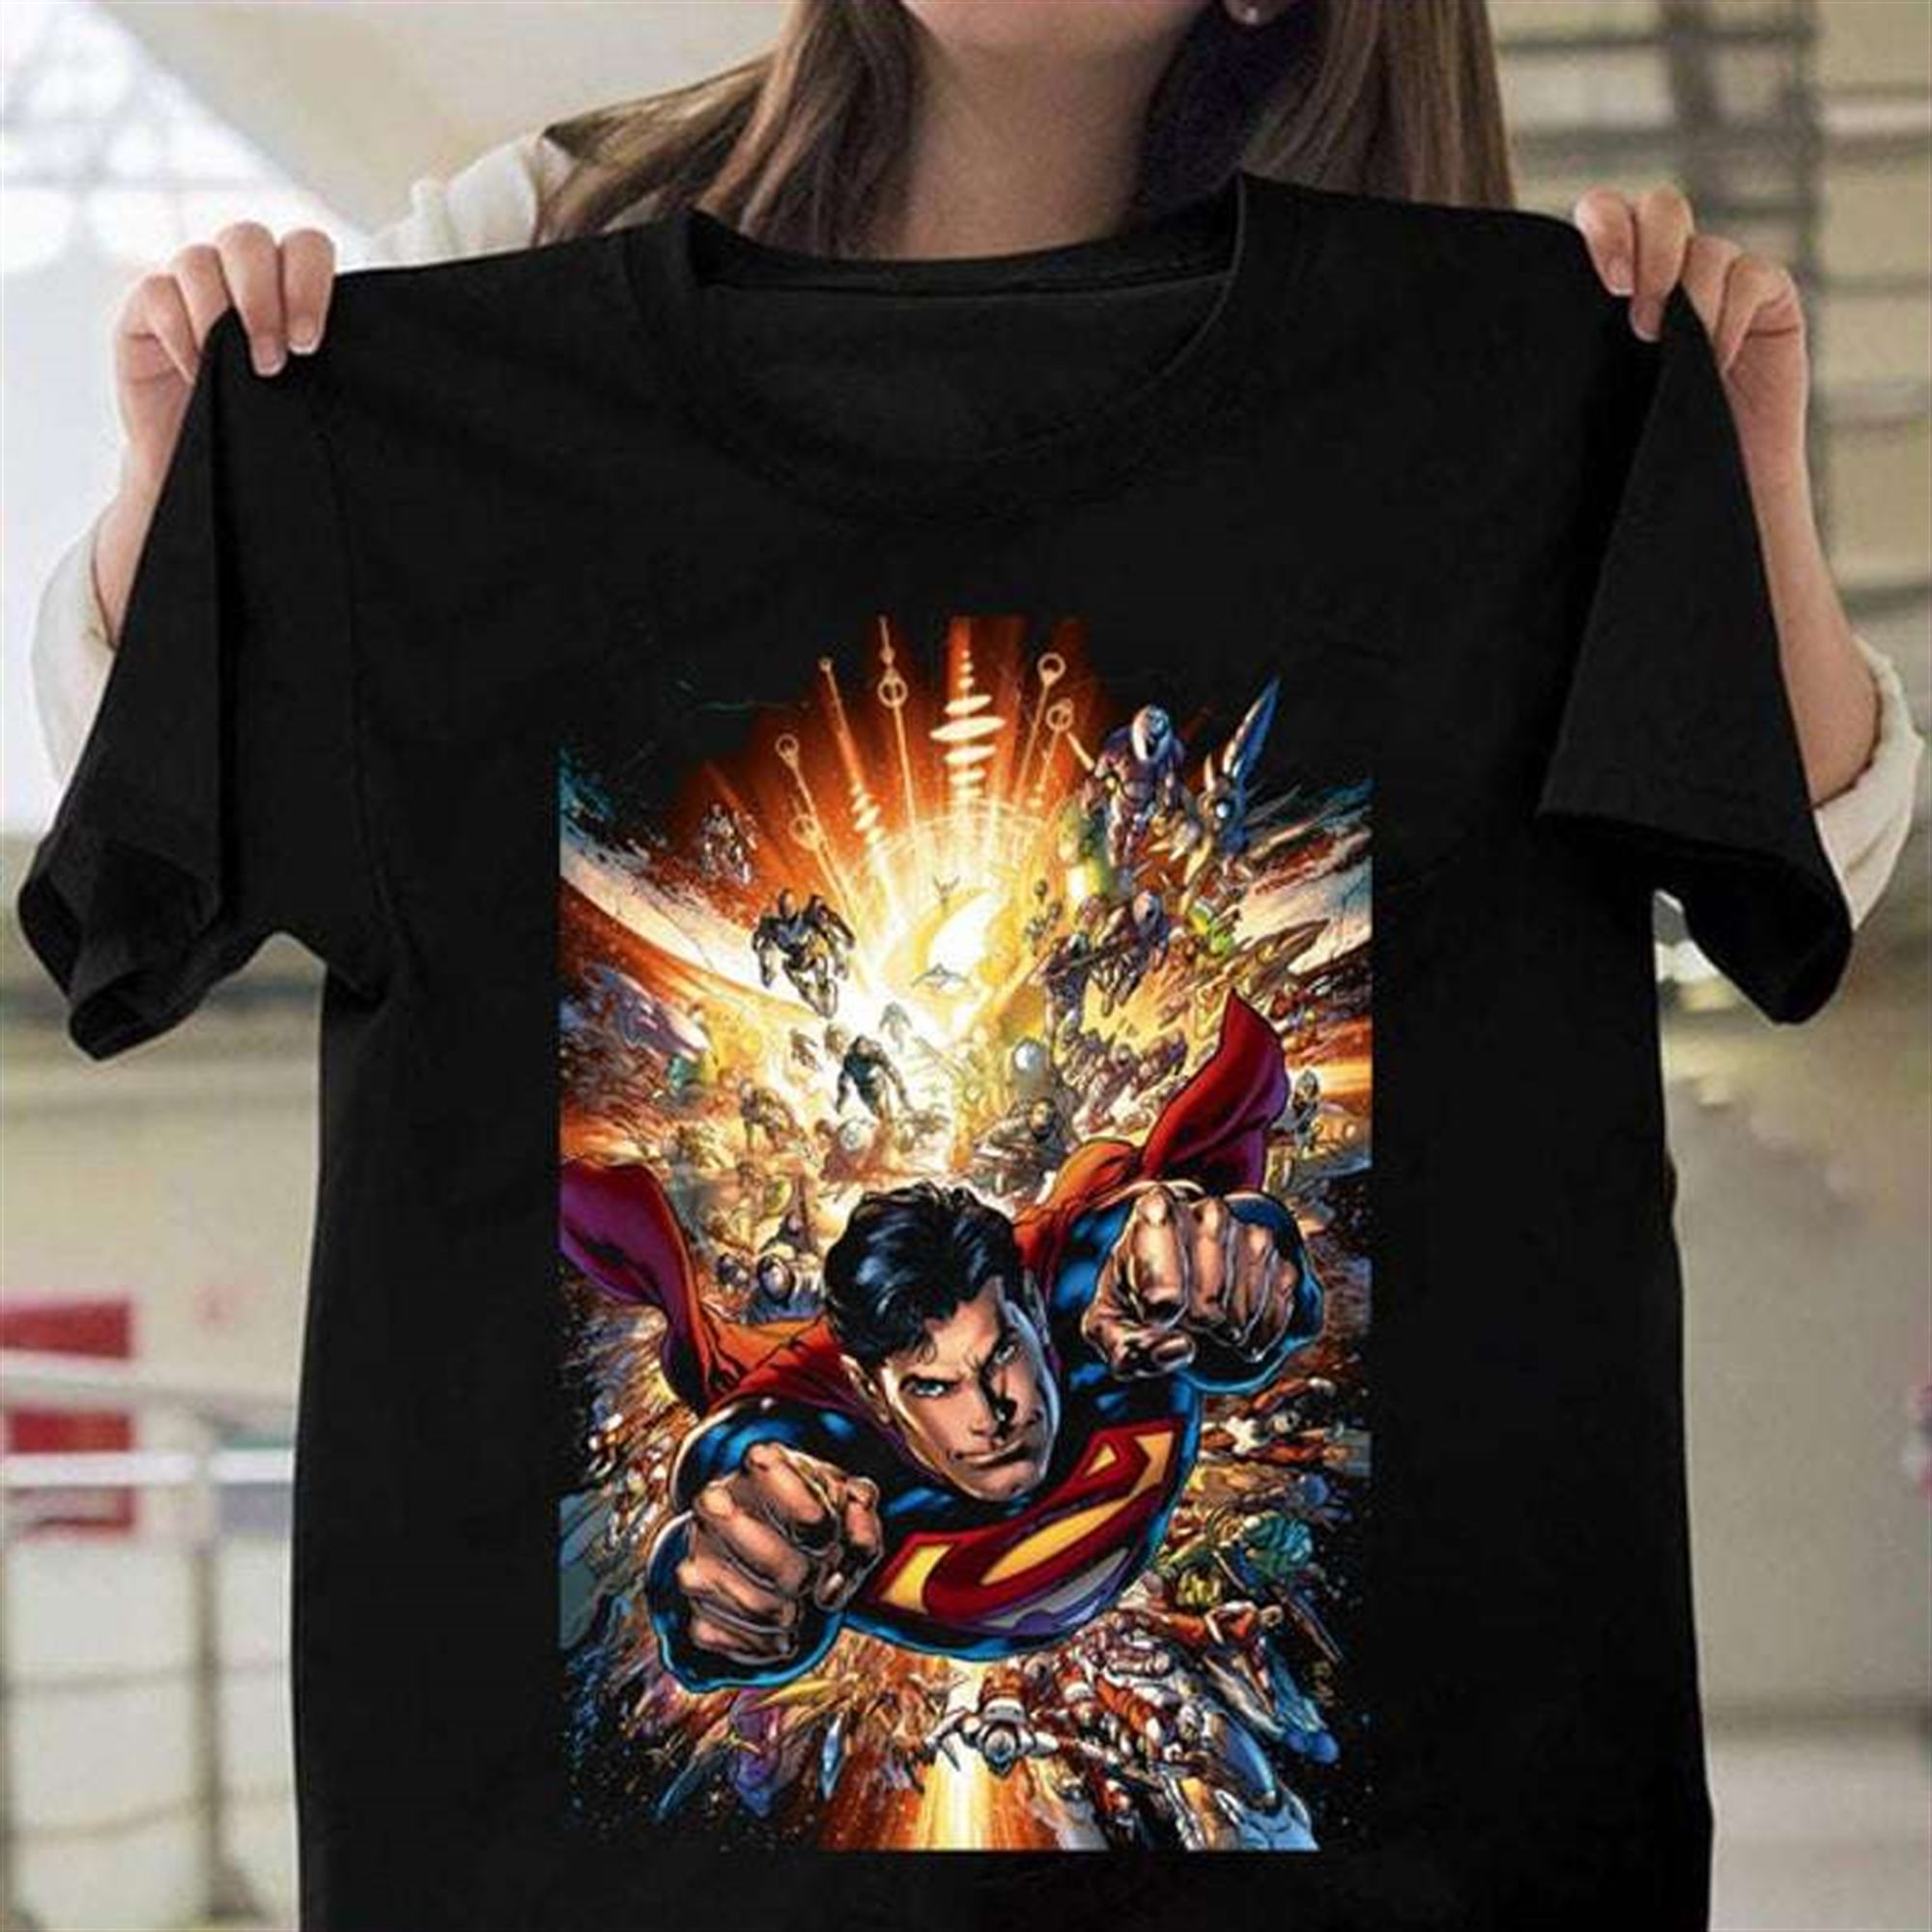 Superman Dc Comics T Shirt Plus Size Up To 5x